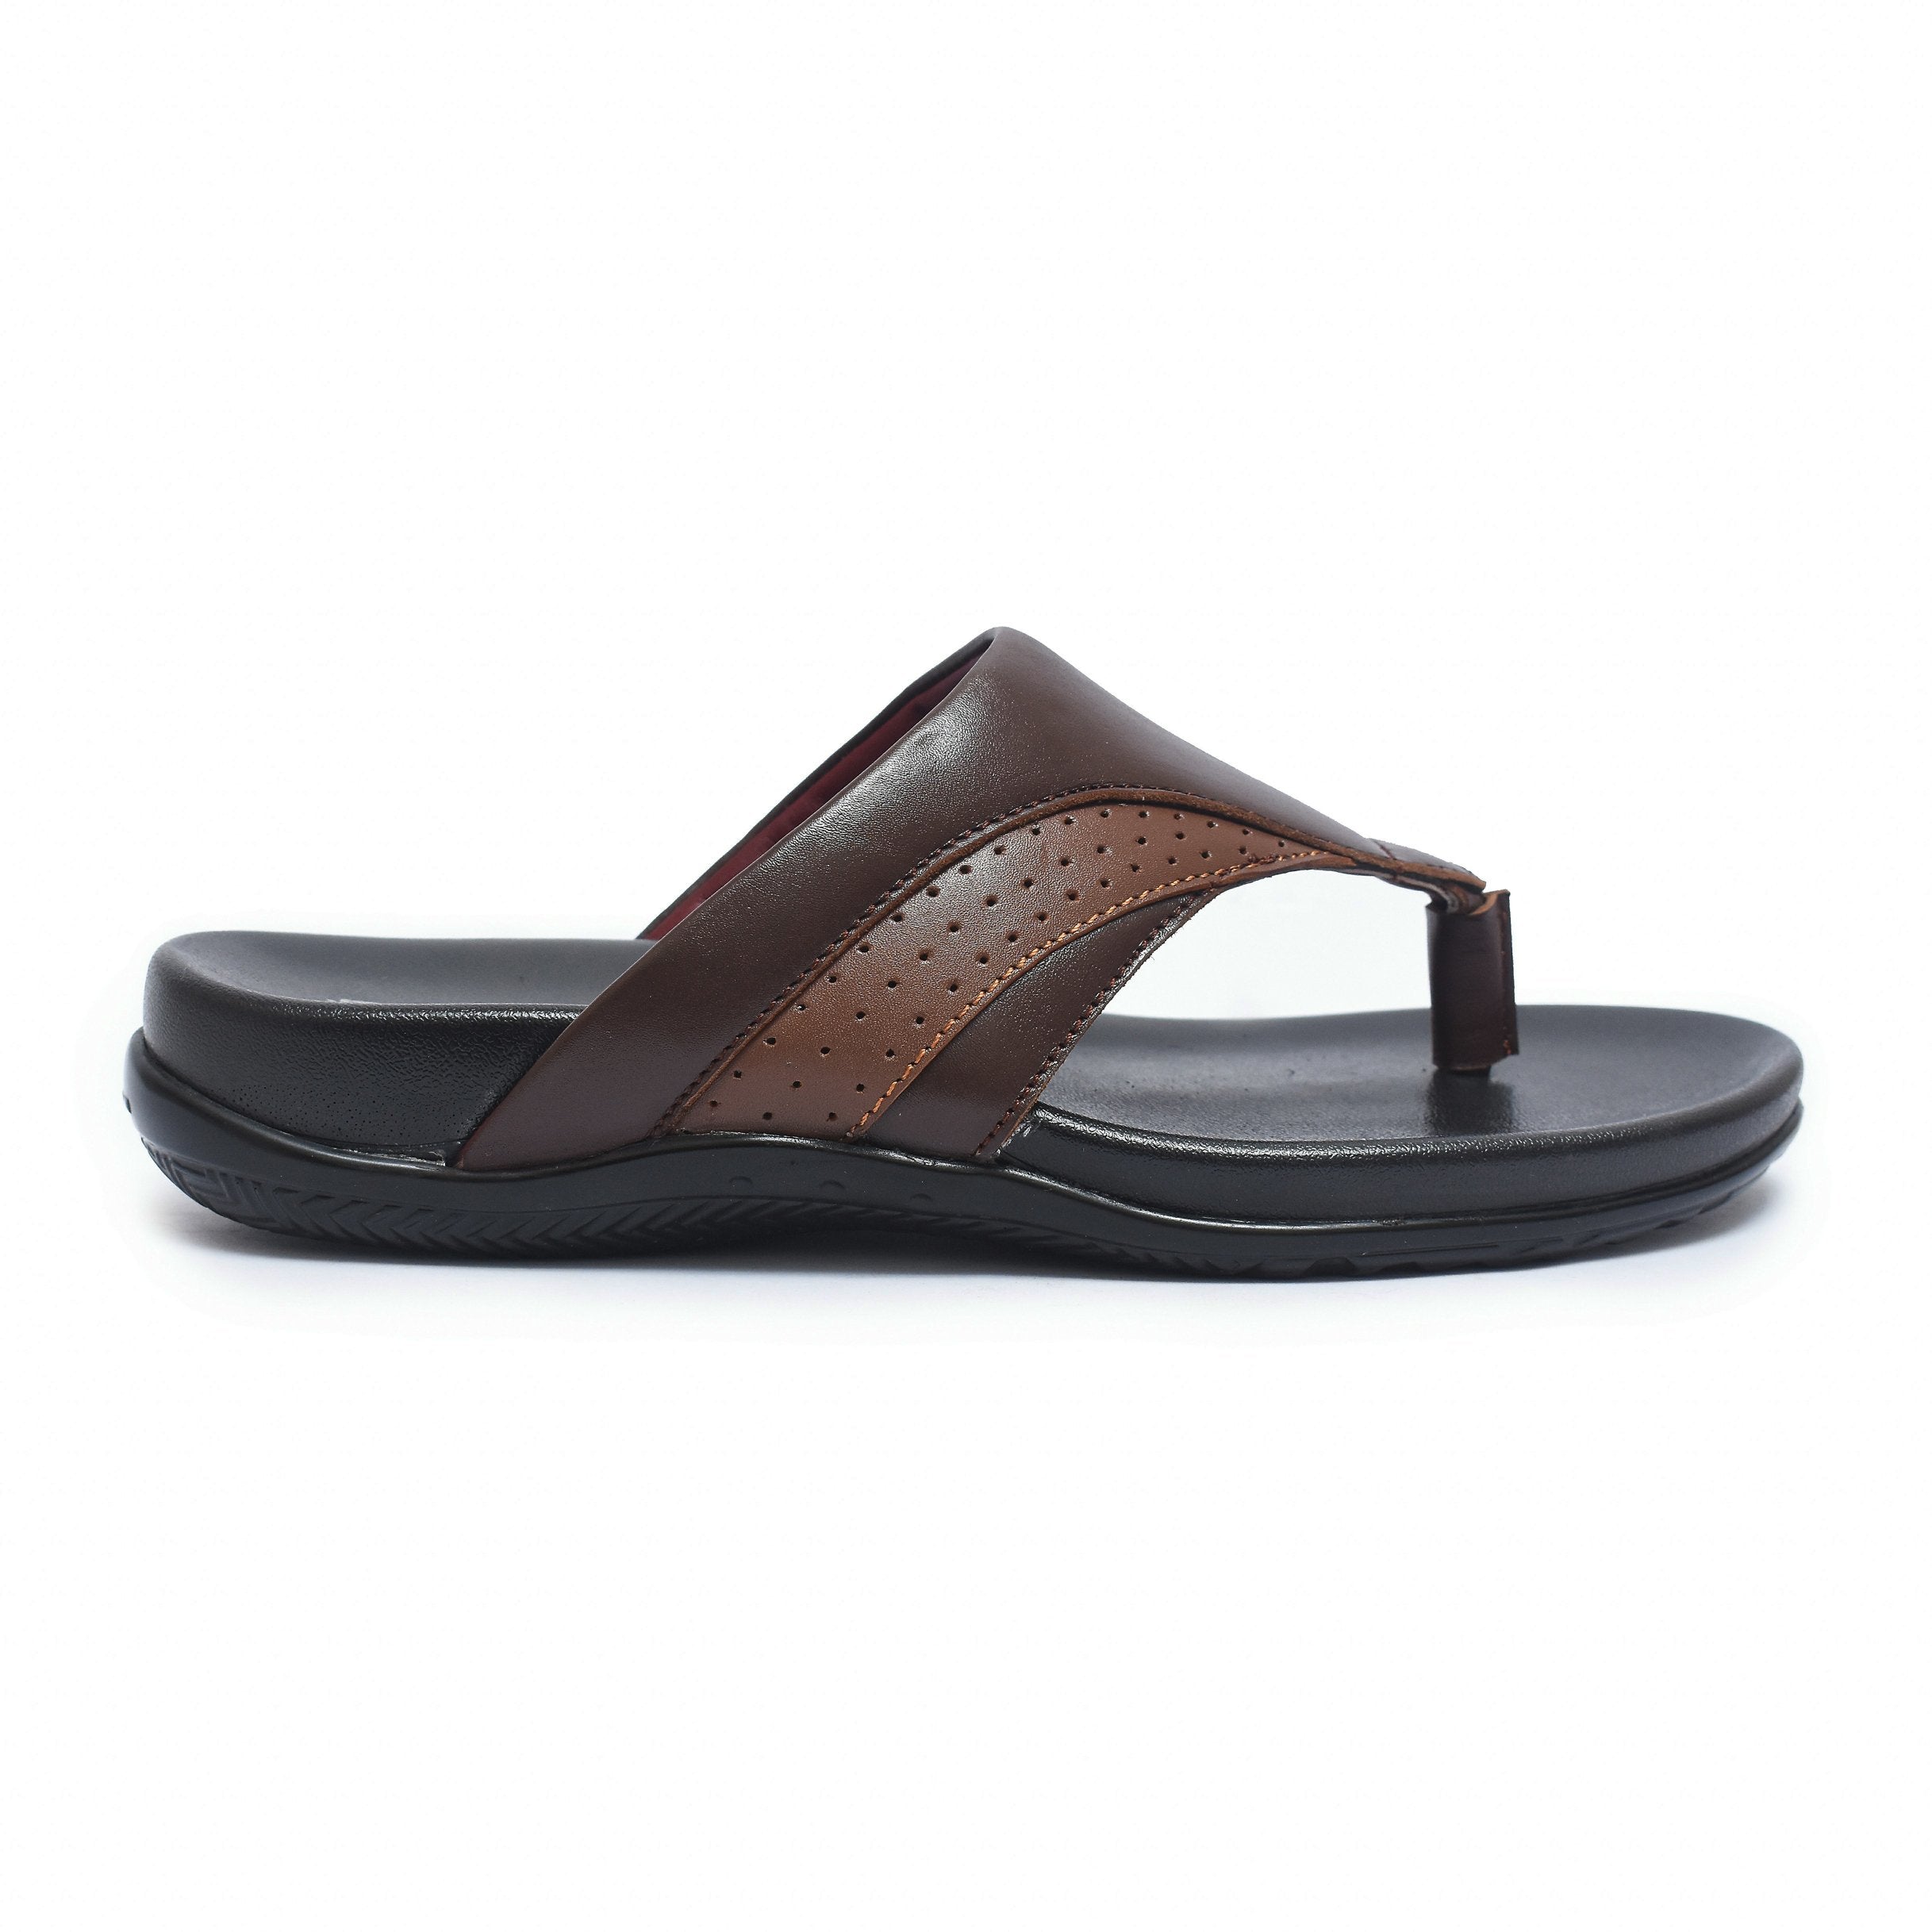 Zays Premium Leather Sandal For Men (Chocolate) - ZAYS-A-79